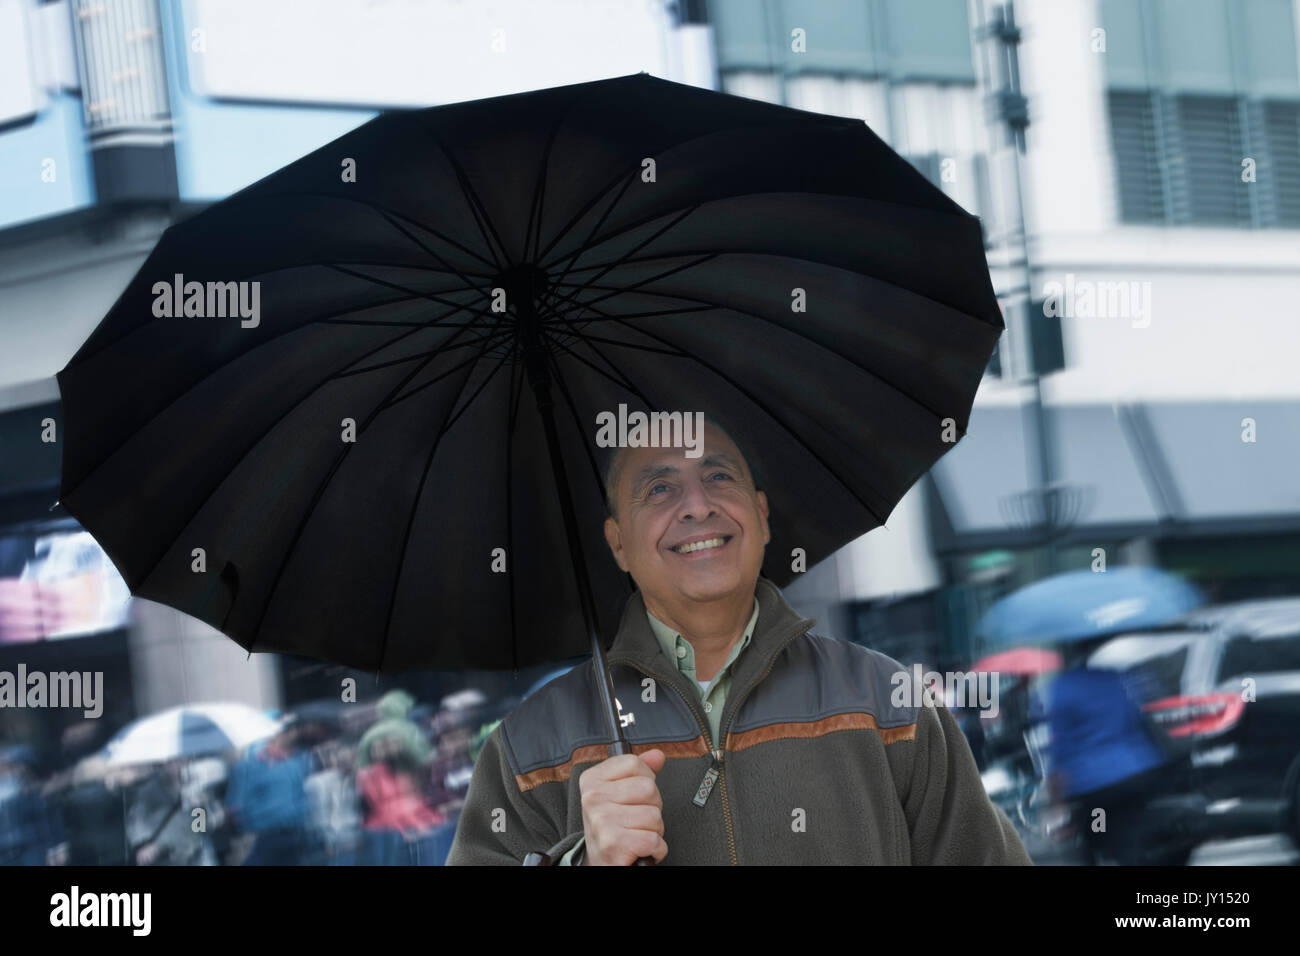 Smiling Hispanic man holding umbrella in city Banque D'Images